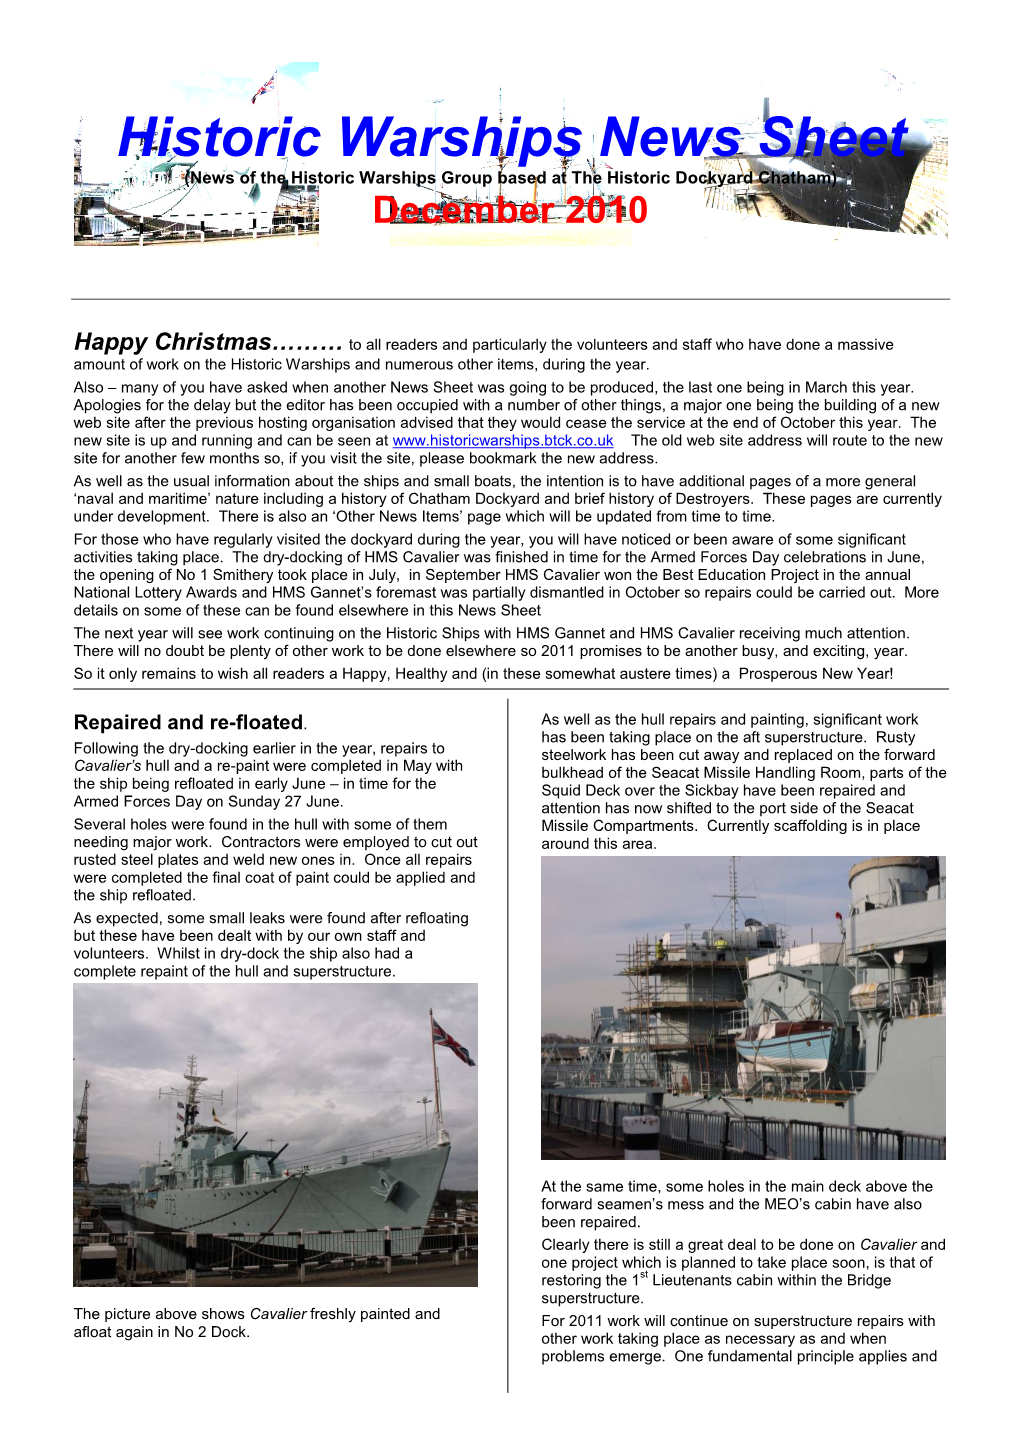 Historic Warships News Sheet (News of the Historic Warships Group Based at the Historic Dockyard Chatham) December 2010